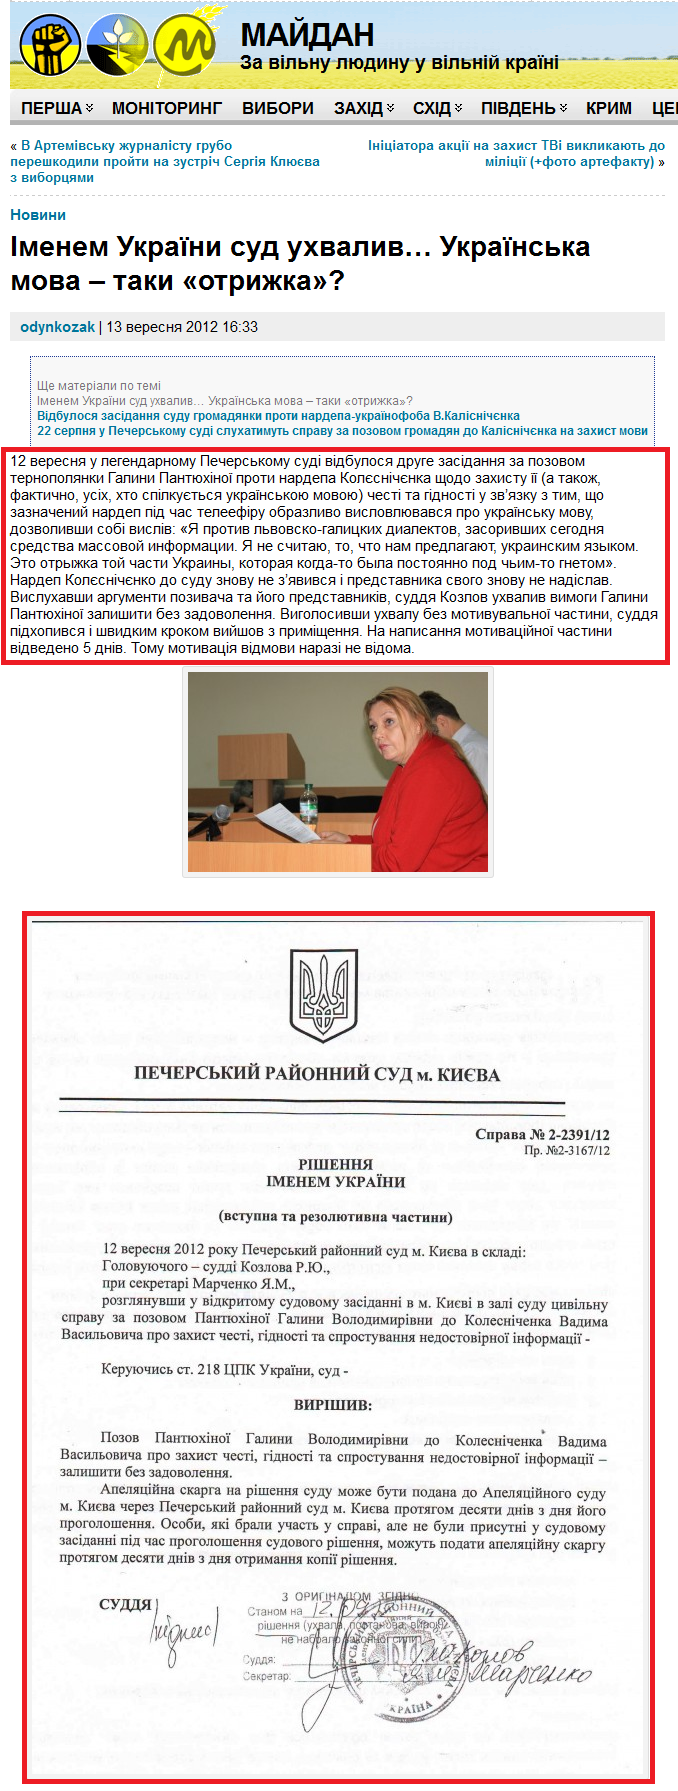 http://maidan.org.ua/2012/09/imenem-ukrajiny-sud-uhvalyv-ukrajinska-mova-taky-otryzhka/